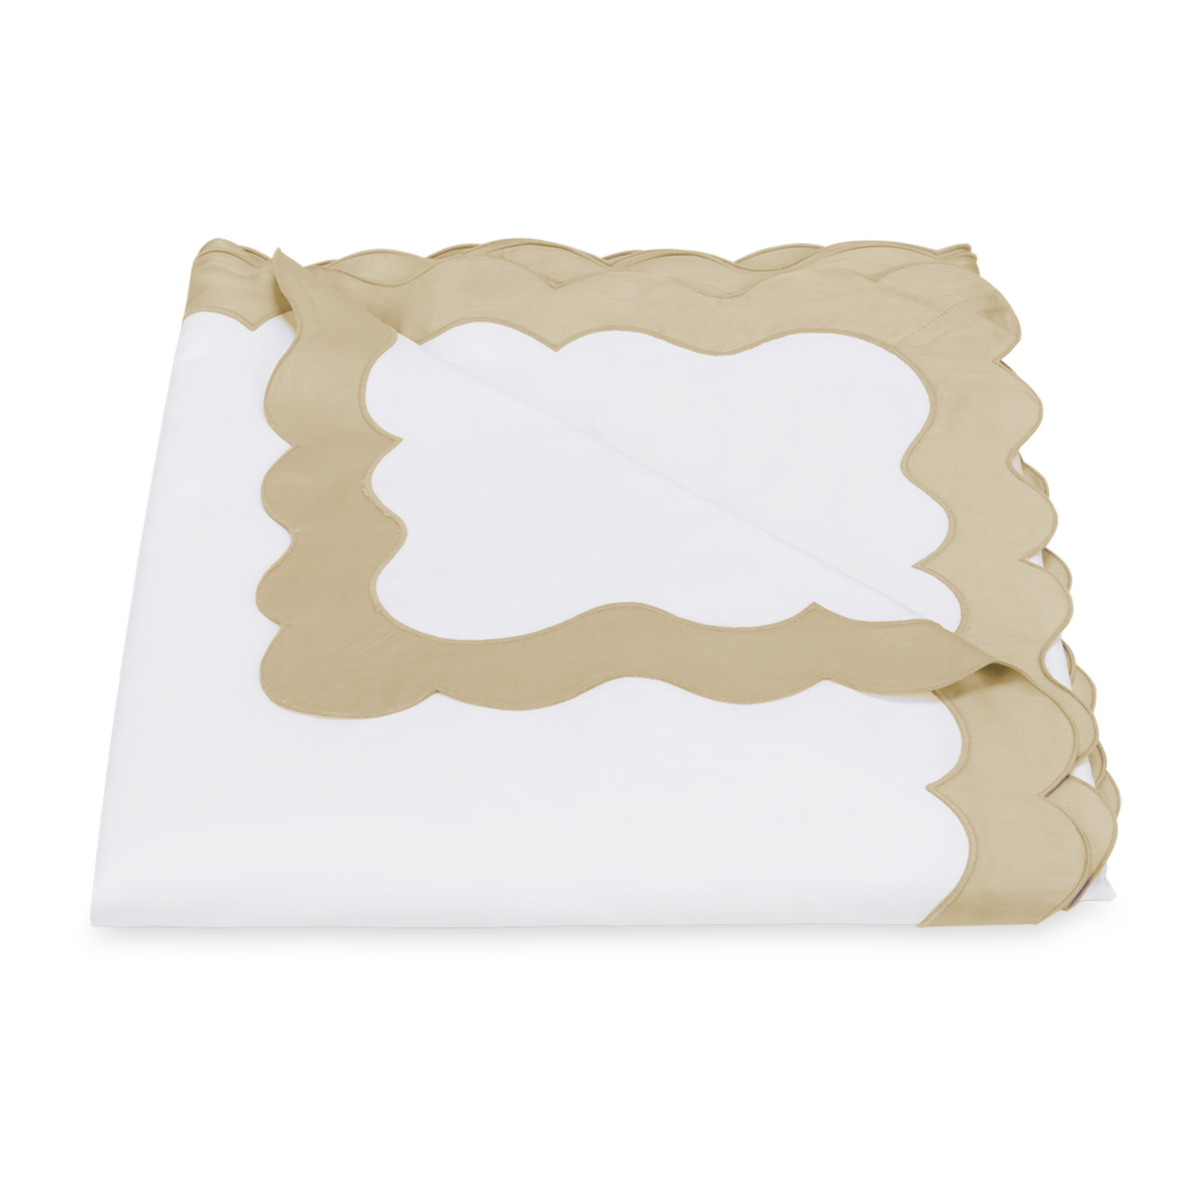 Folded Duvet Cover of Matouk Lorelei Bedding in Champagne Color